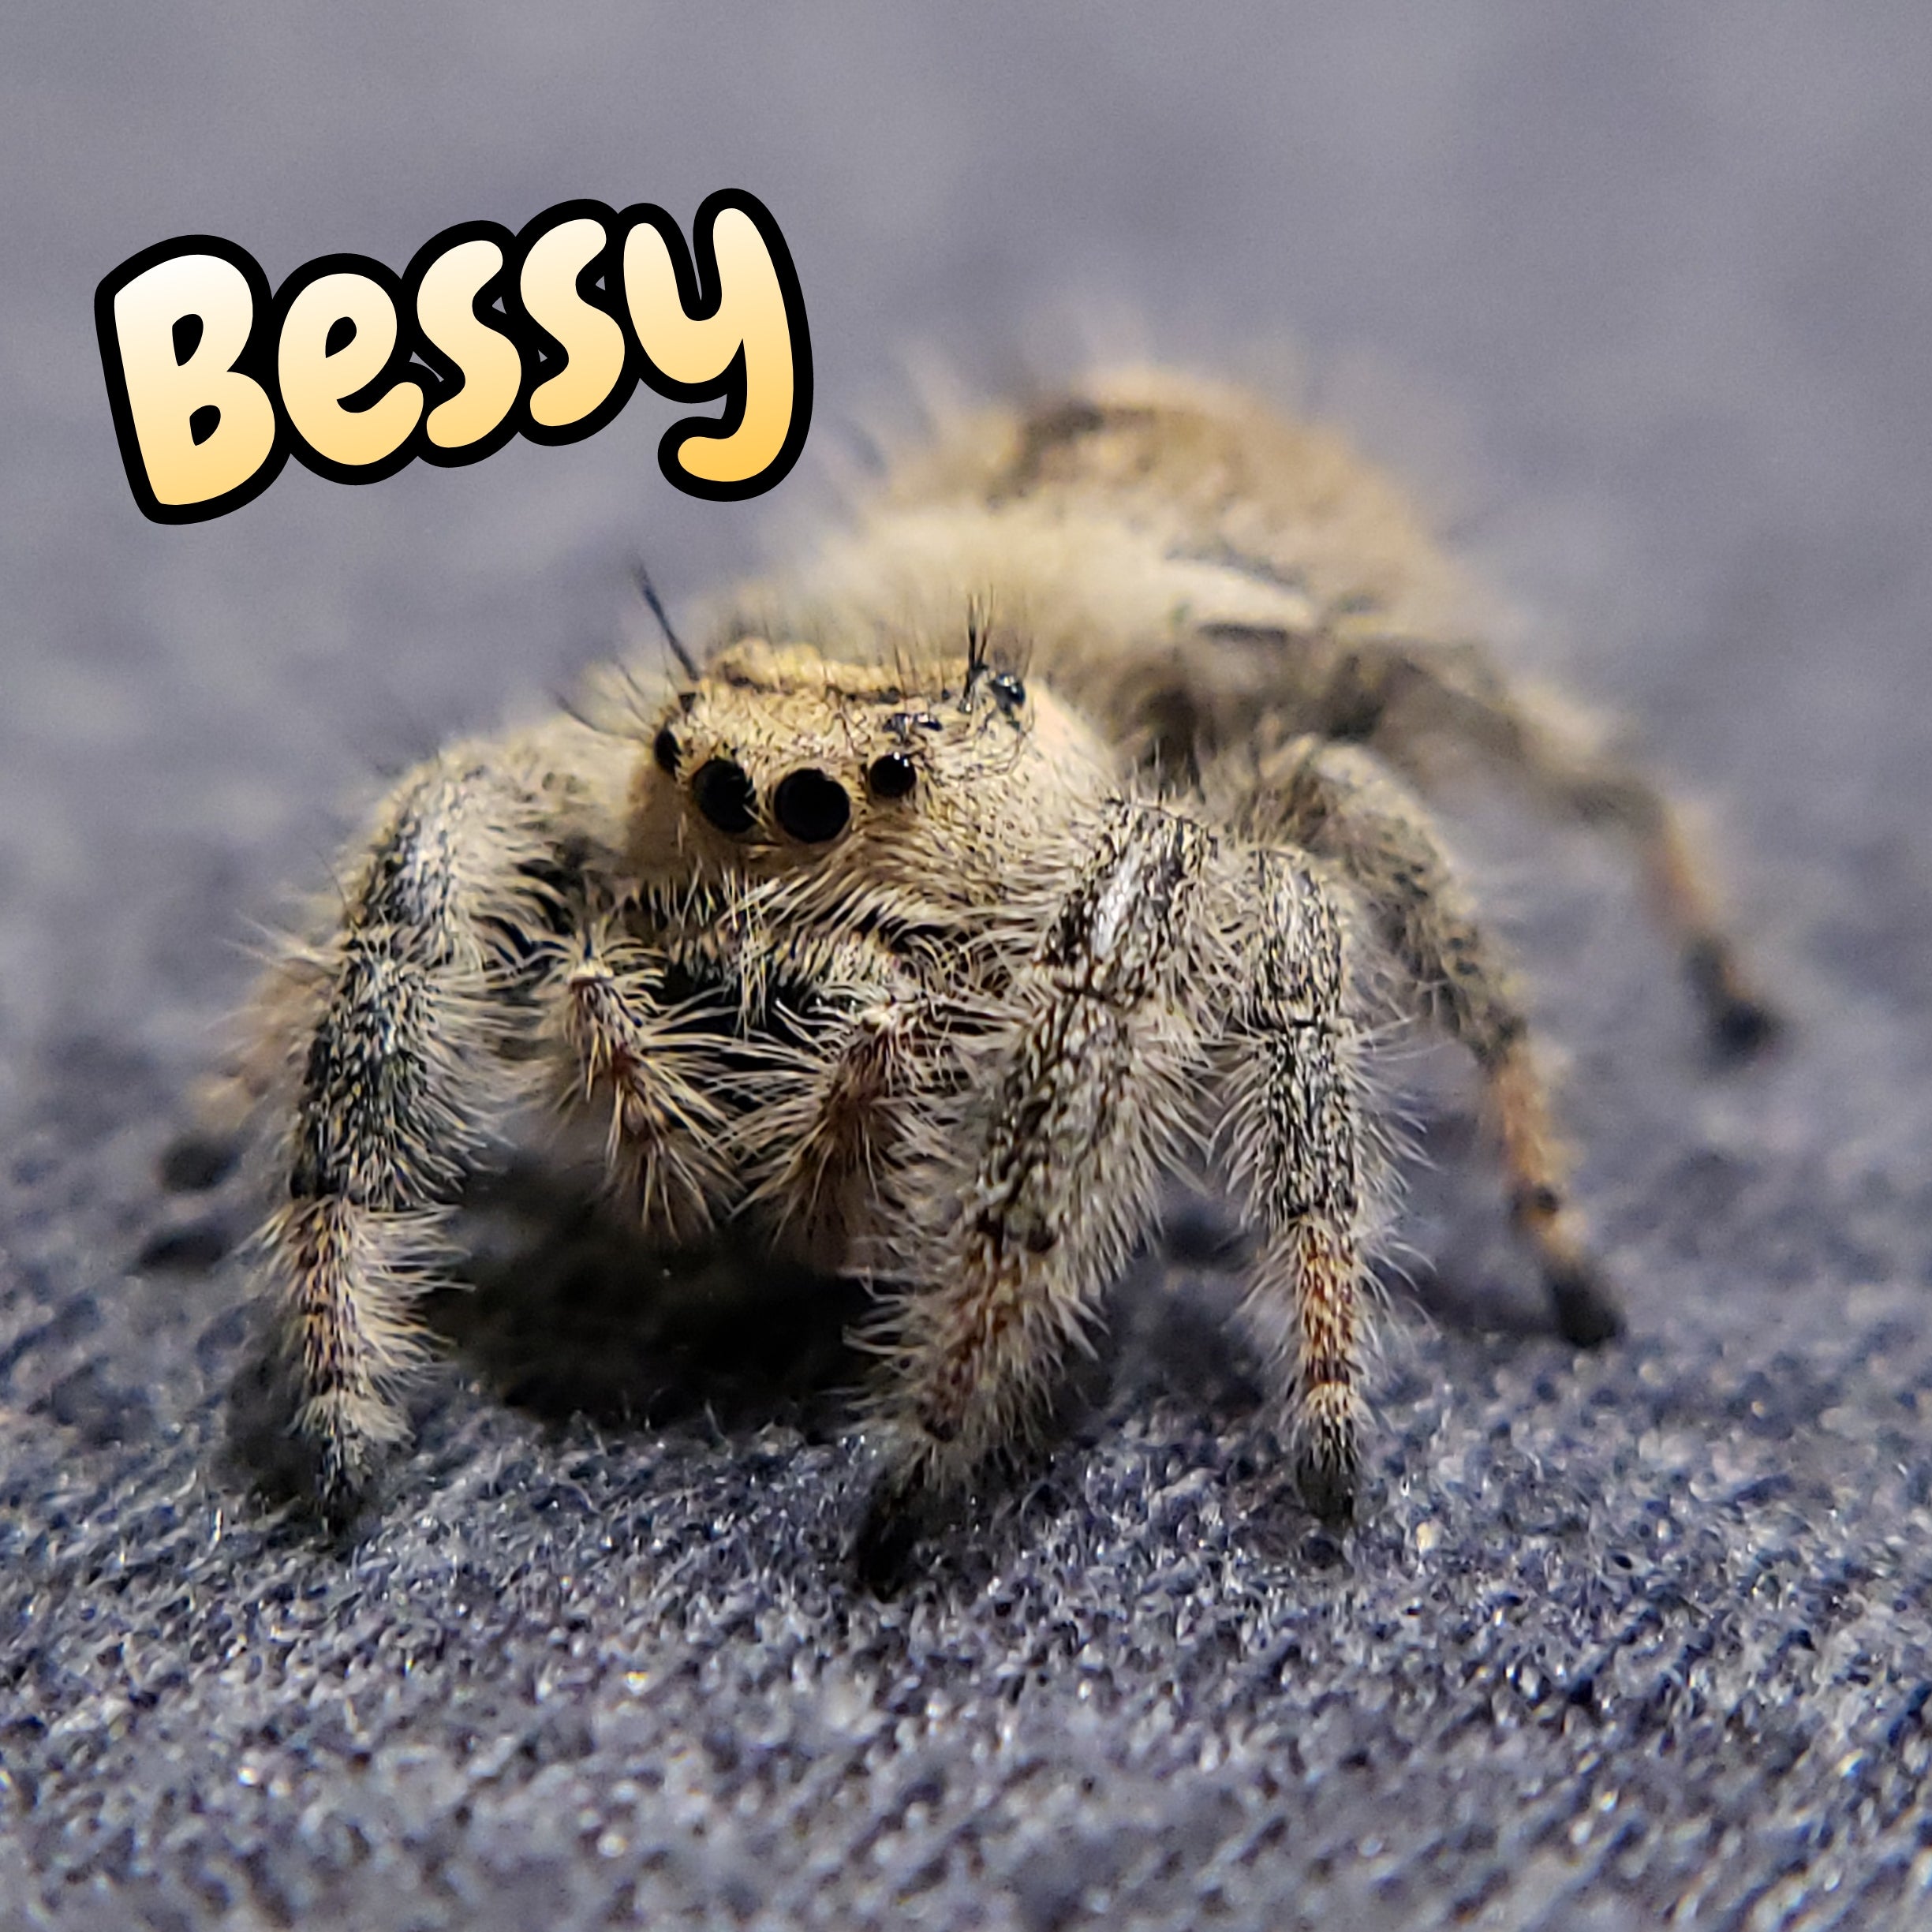 Regal Jumping Spider "Bessy"